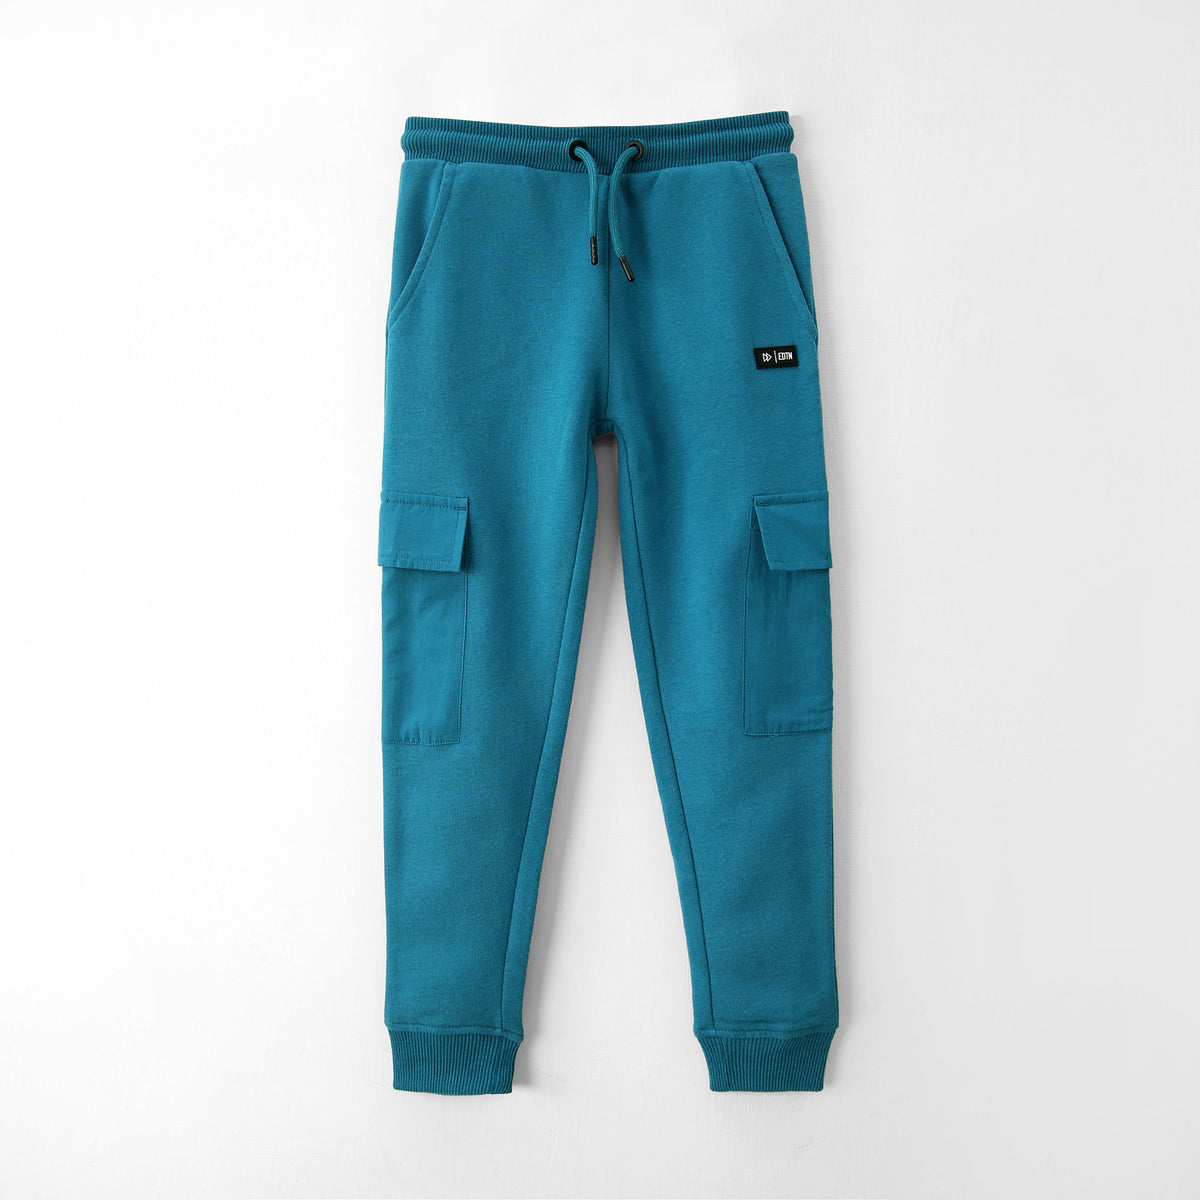 Premium Quality Boys Velcro Pouch Pocket Fleece Jogger Trouser